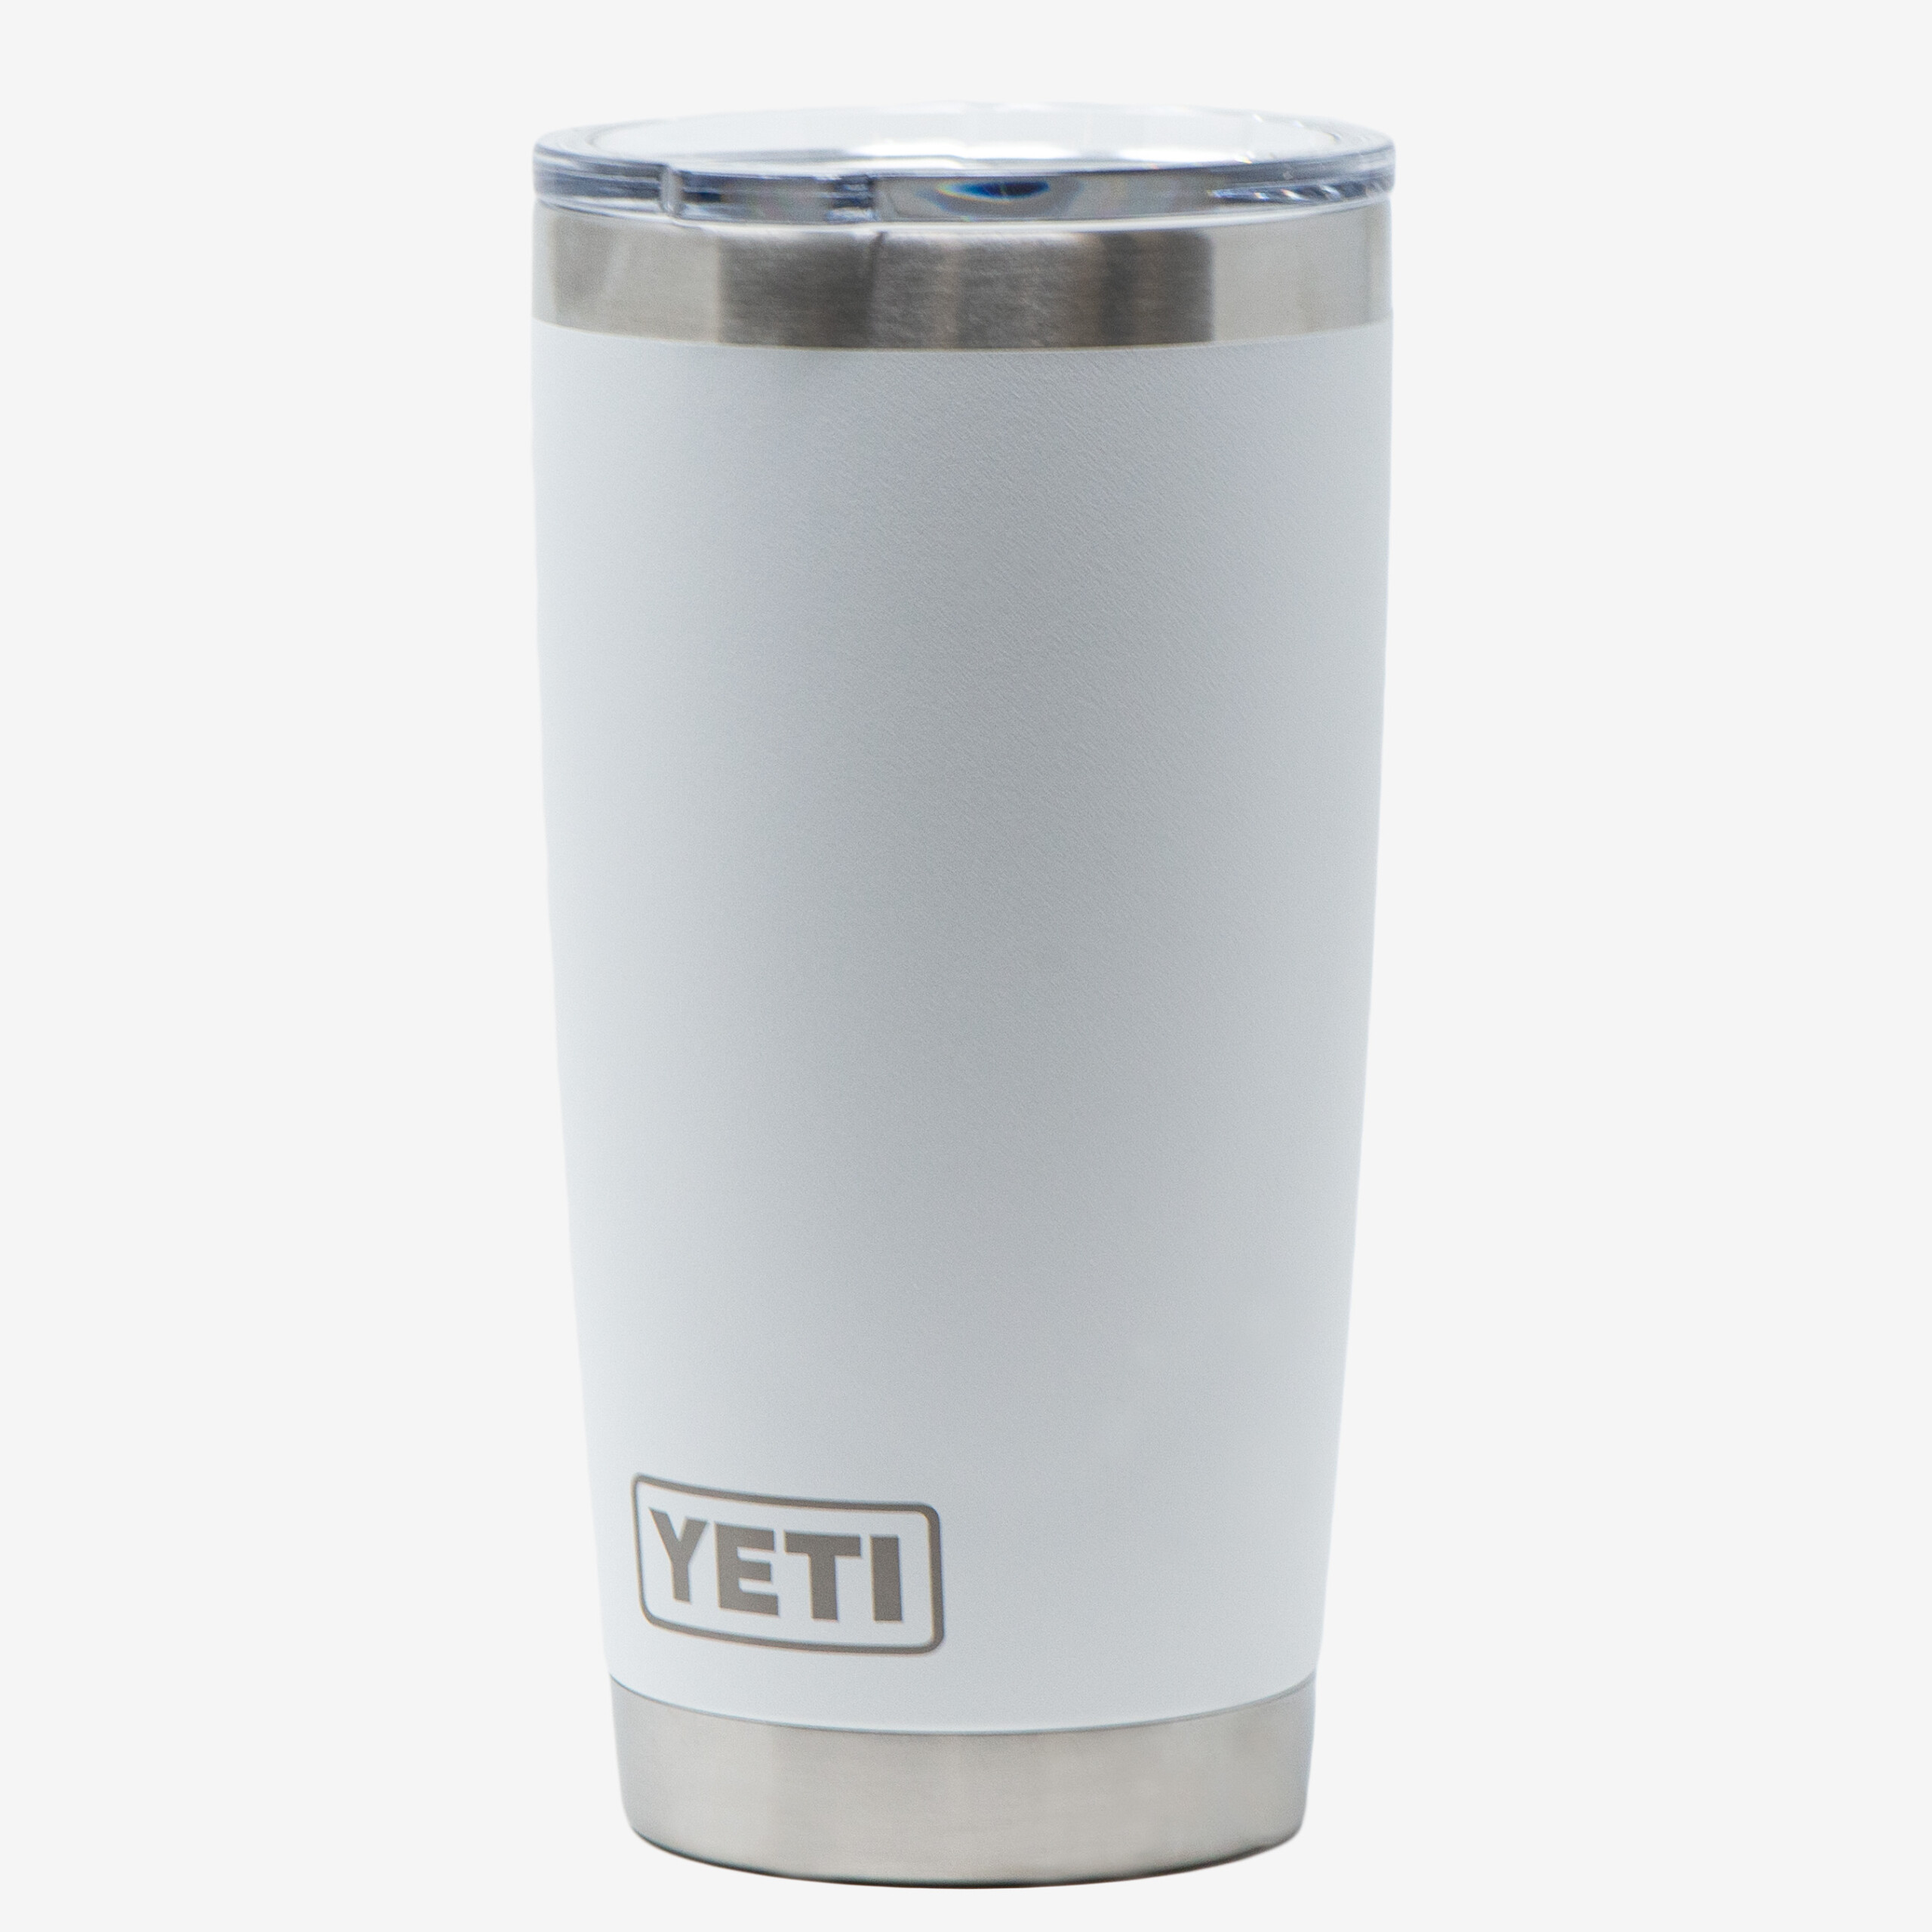 Yeti Rambler 20 Oz. Silver Stainless Steel Insulated Tumbler